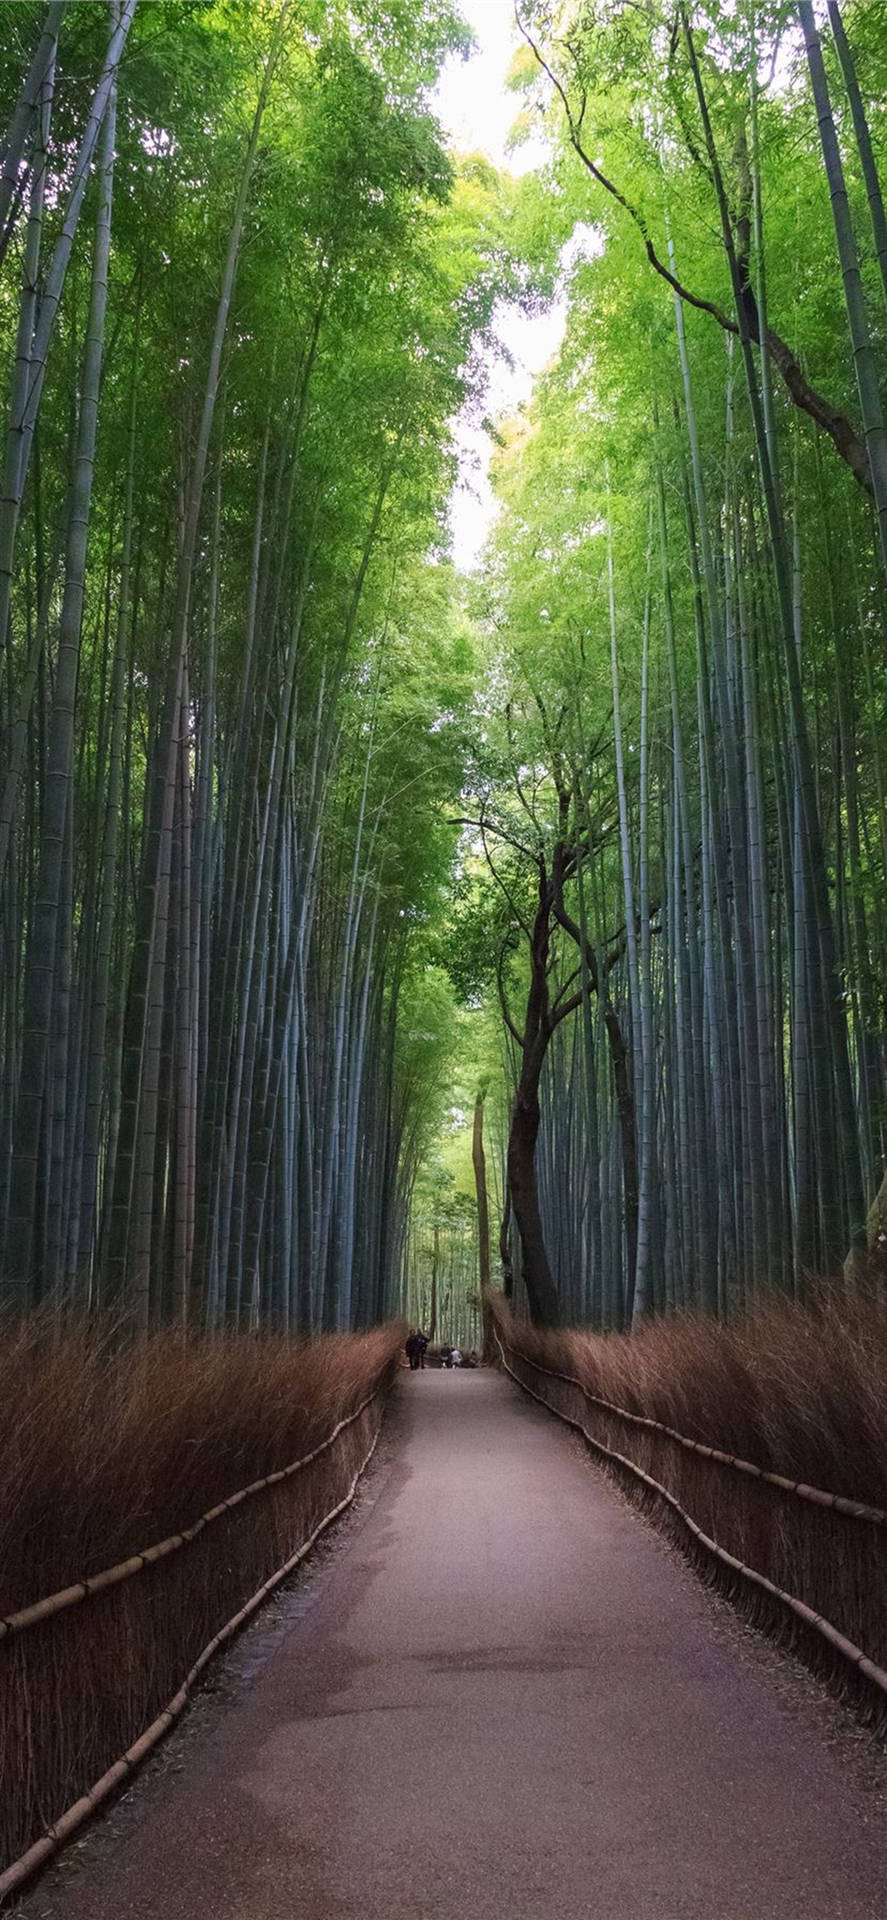 Tall Bamboo Pathway Iphone